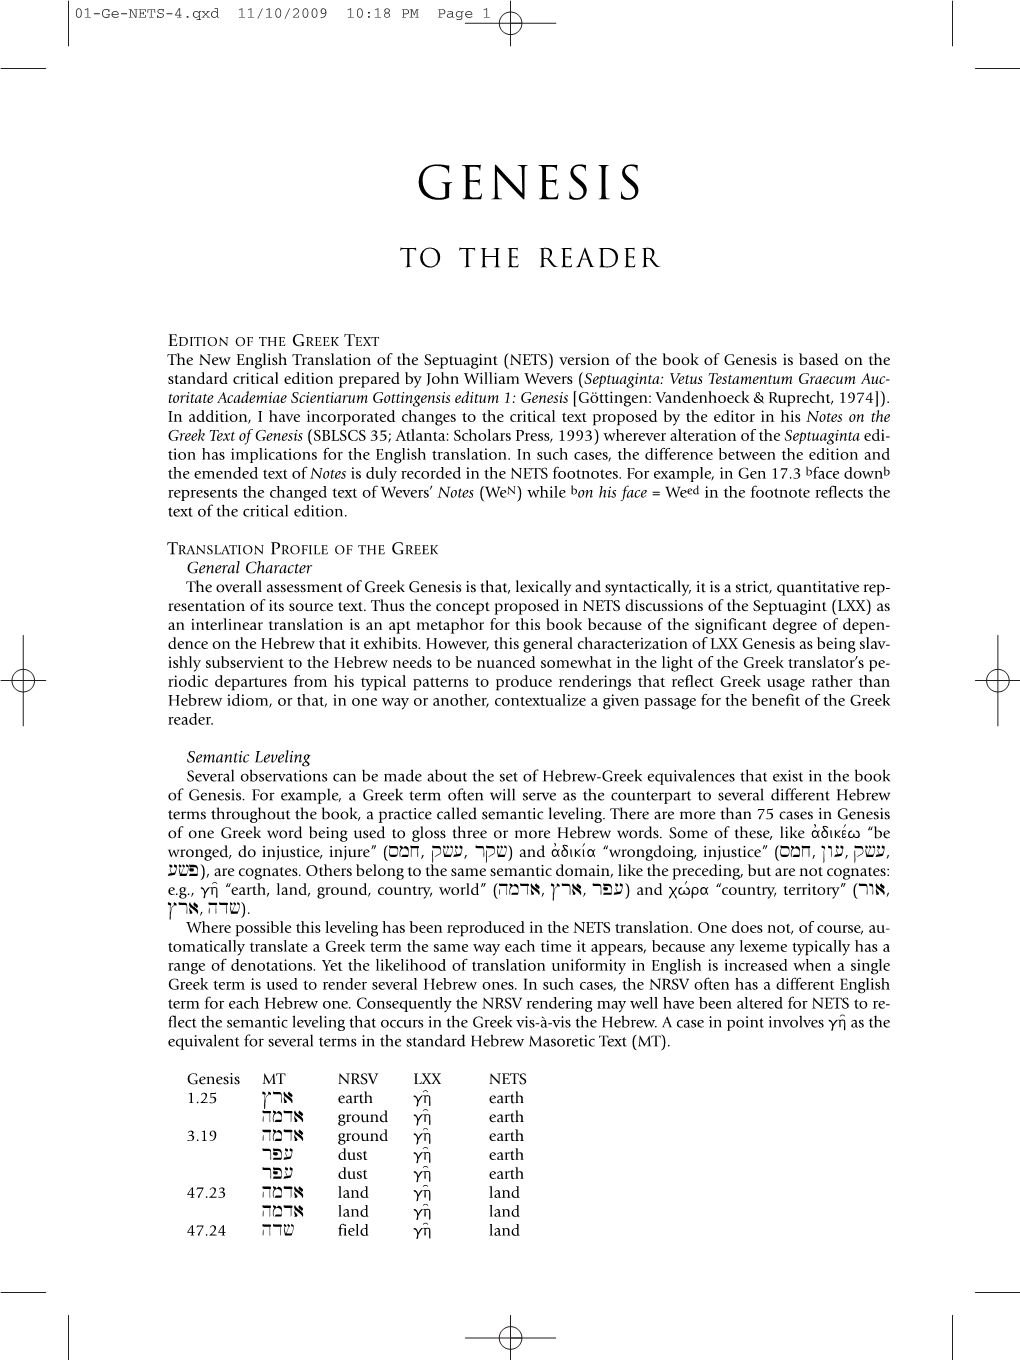 A New English Translation of the Septuagint. 01 Genesis